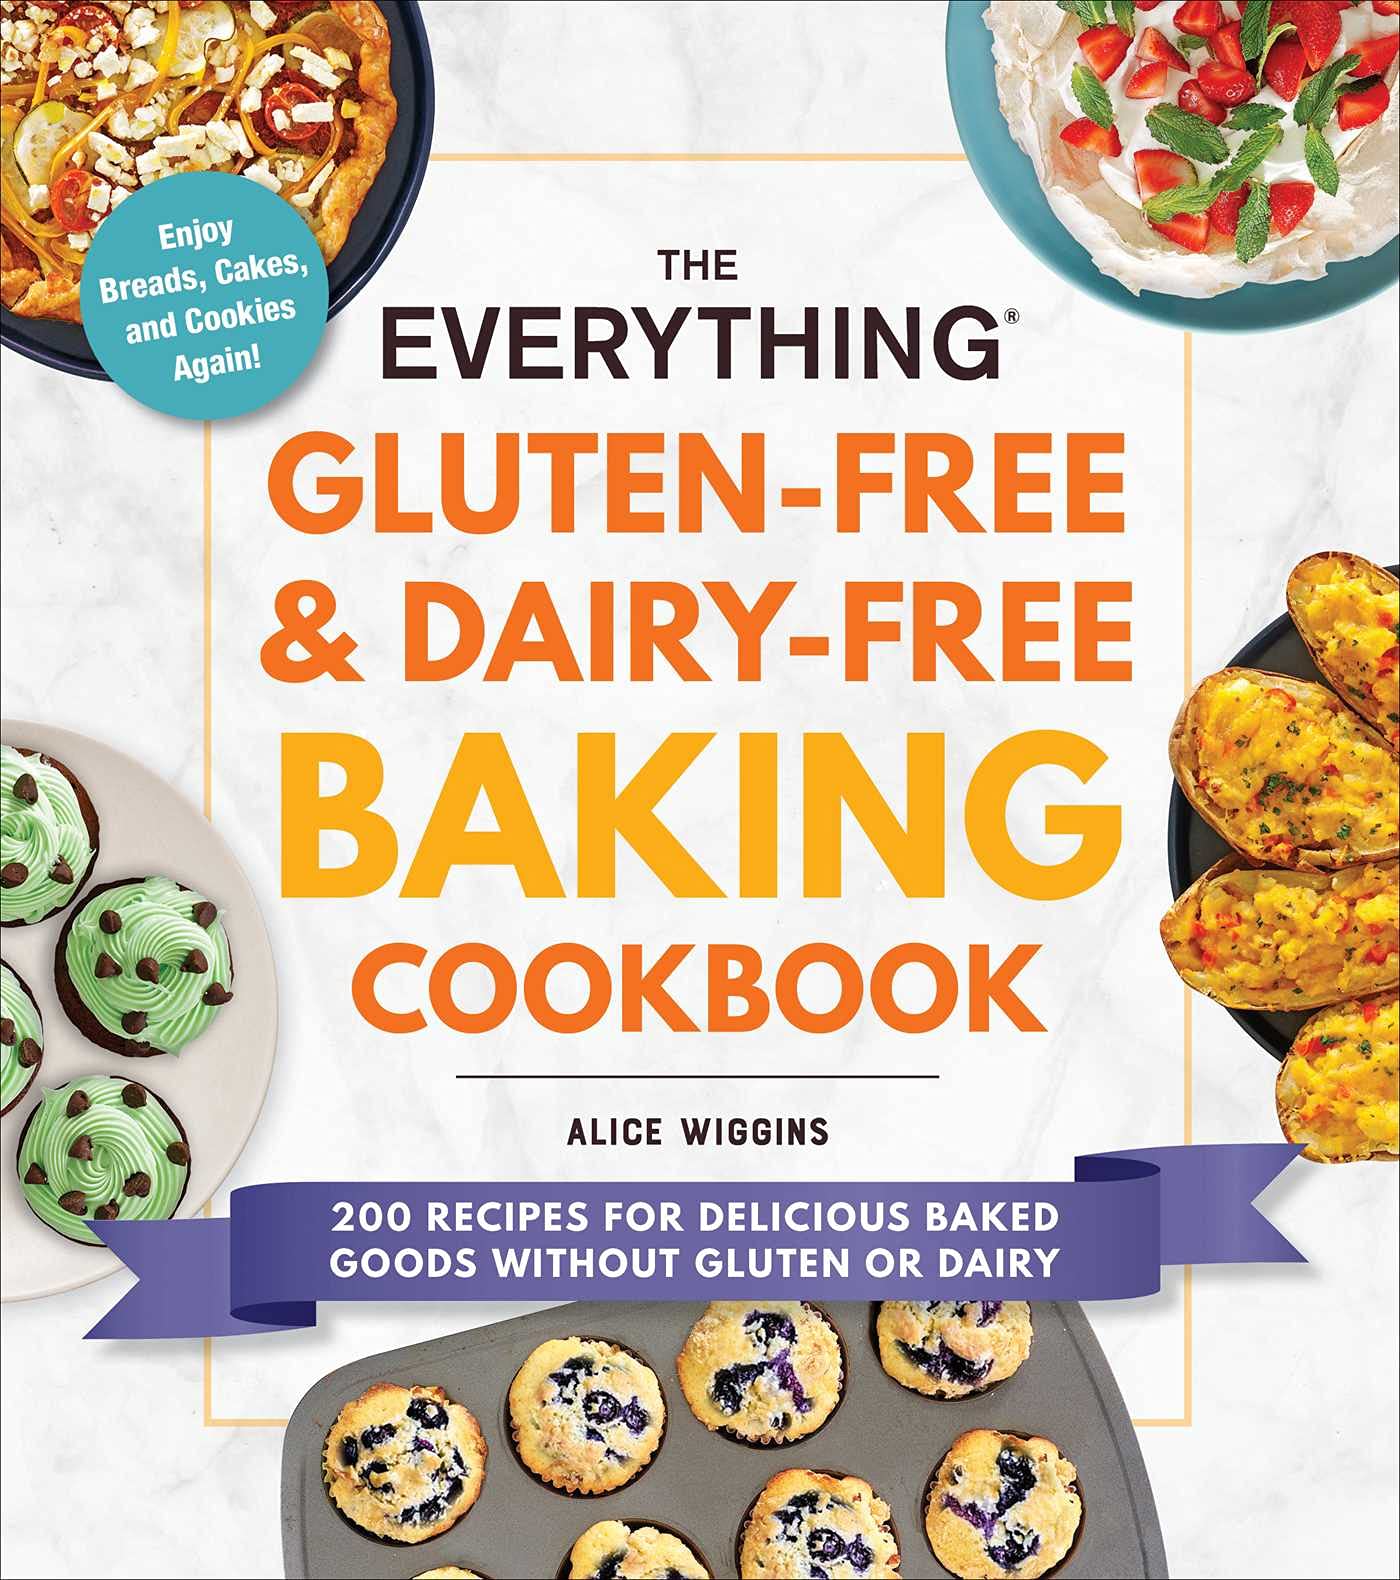 ~The Everything Gluten-Free & Dairy-Free Baking Cookbook!